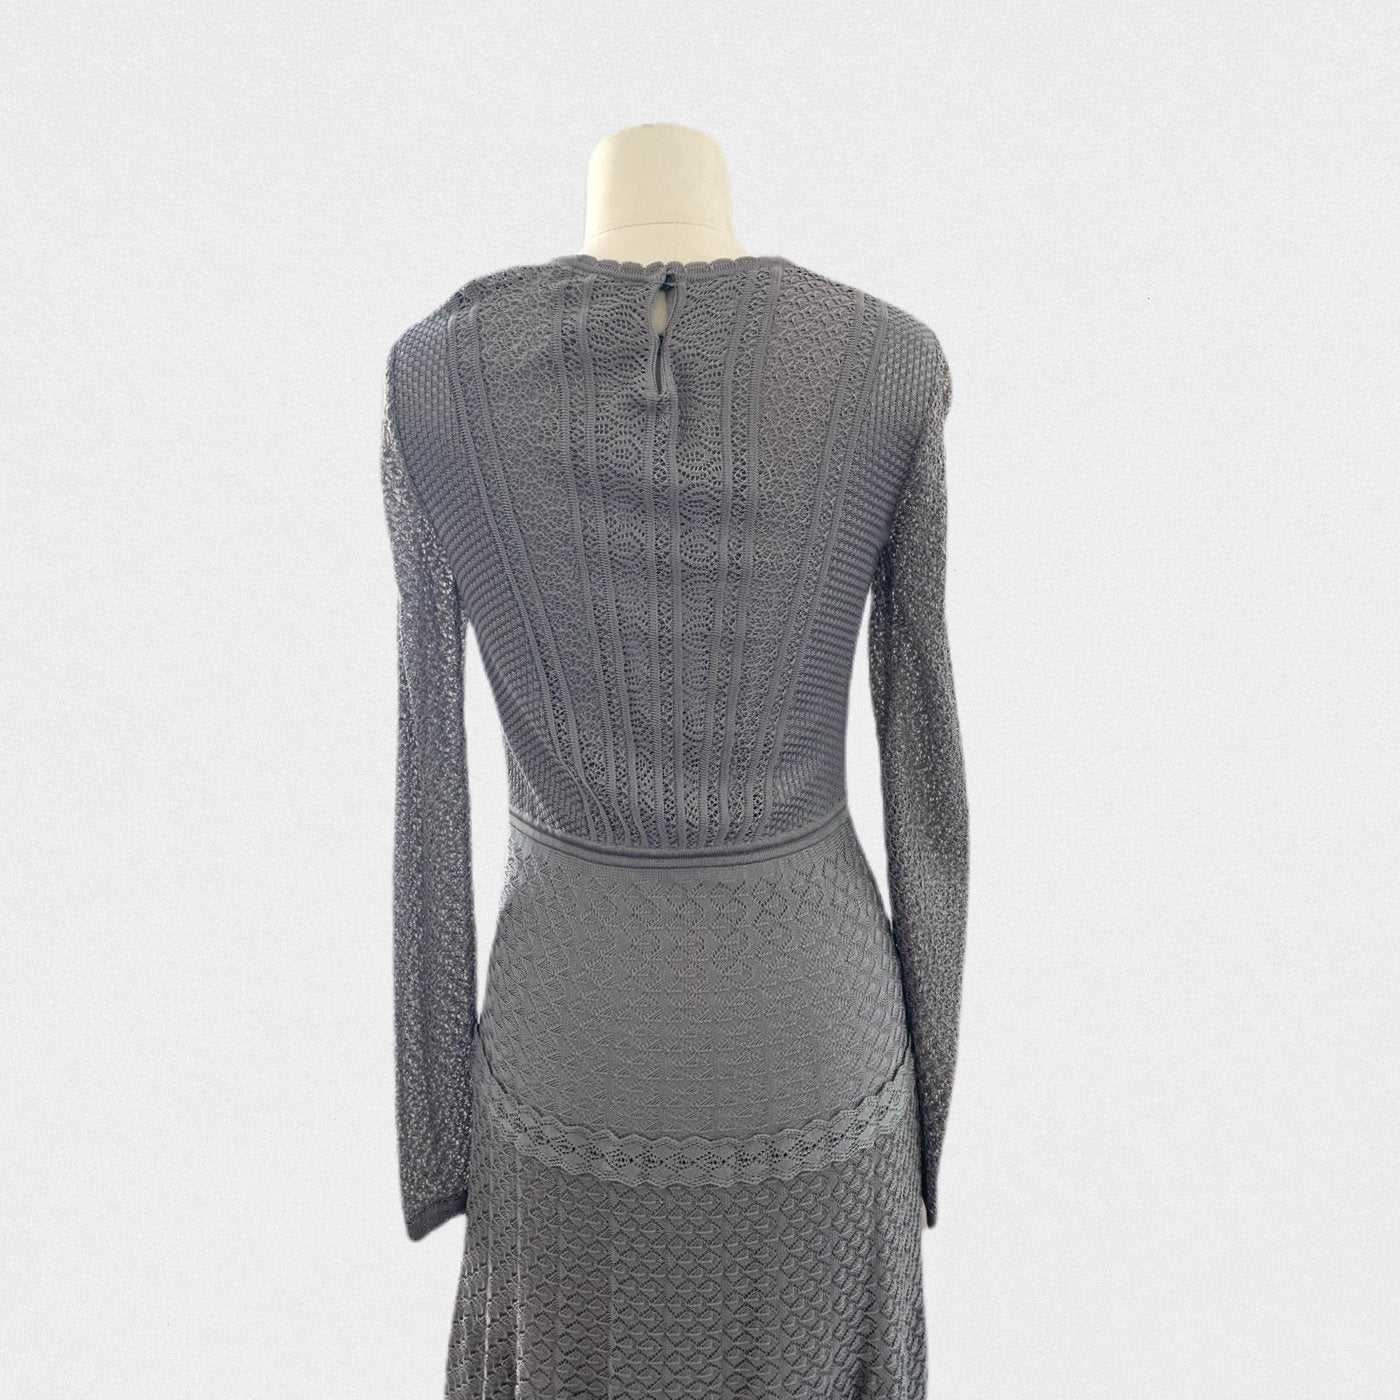 Lysis vintage Christian Dior long knitted dress by Maria Grazia Chiuri - M - 2010s